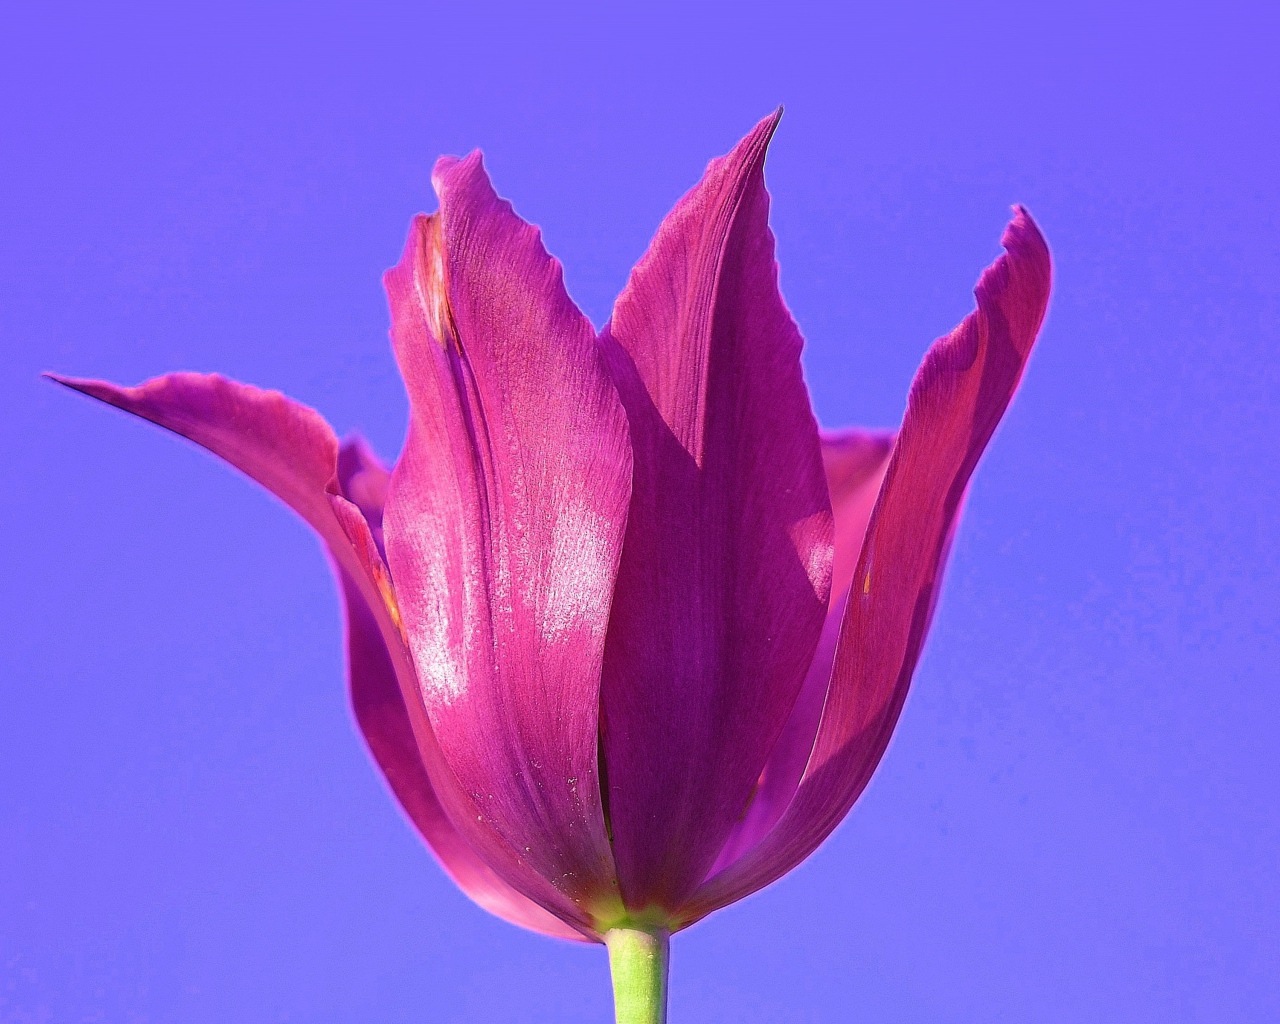 Розовый цветок тюльпана на сиреневом фоне